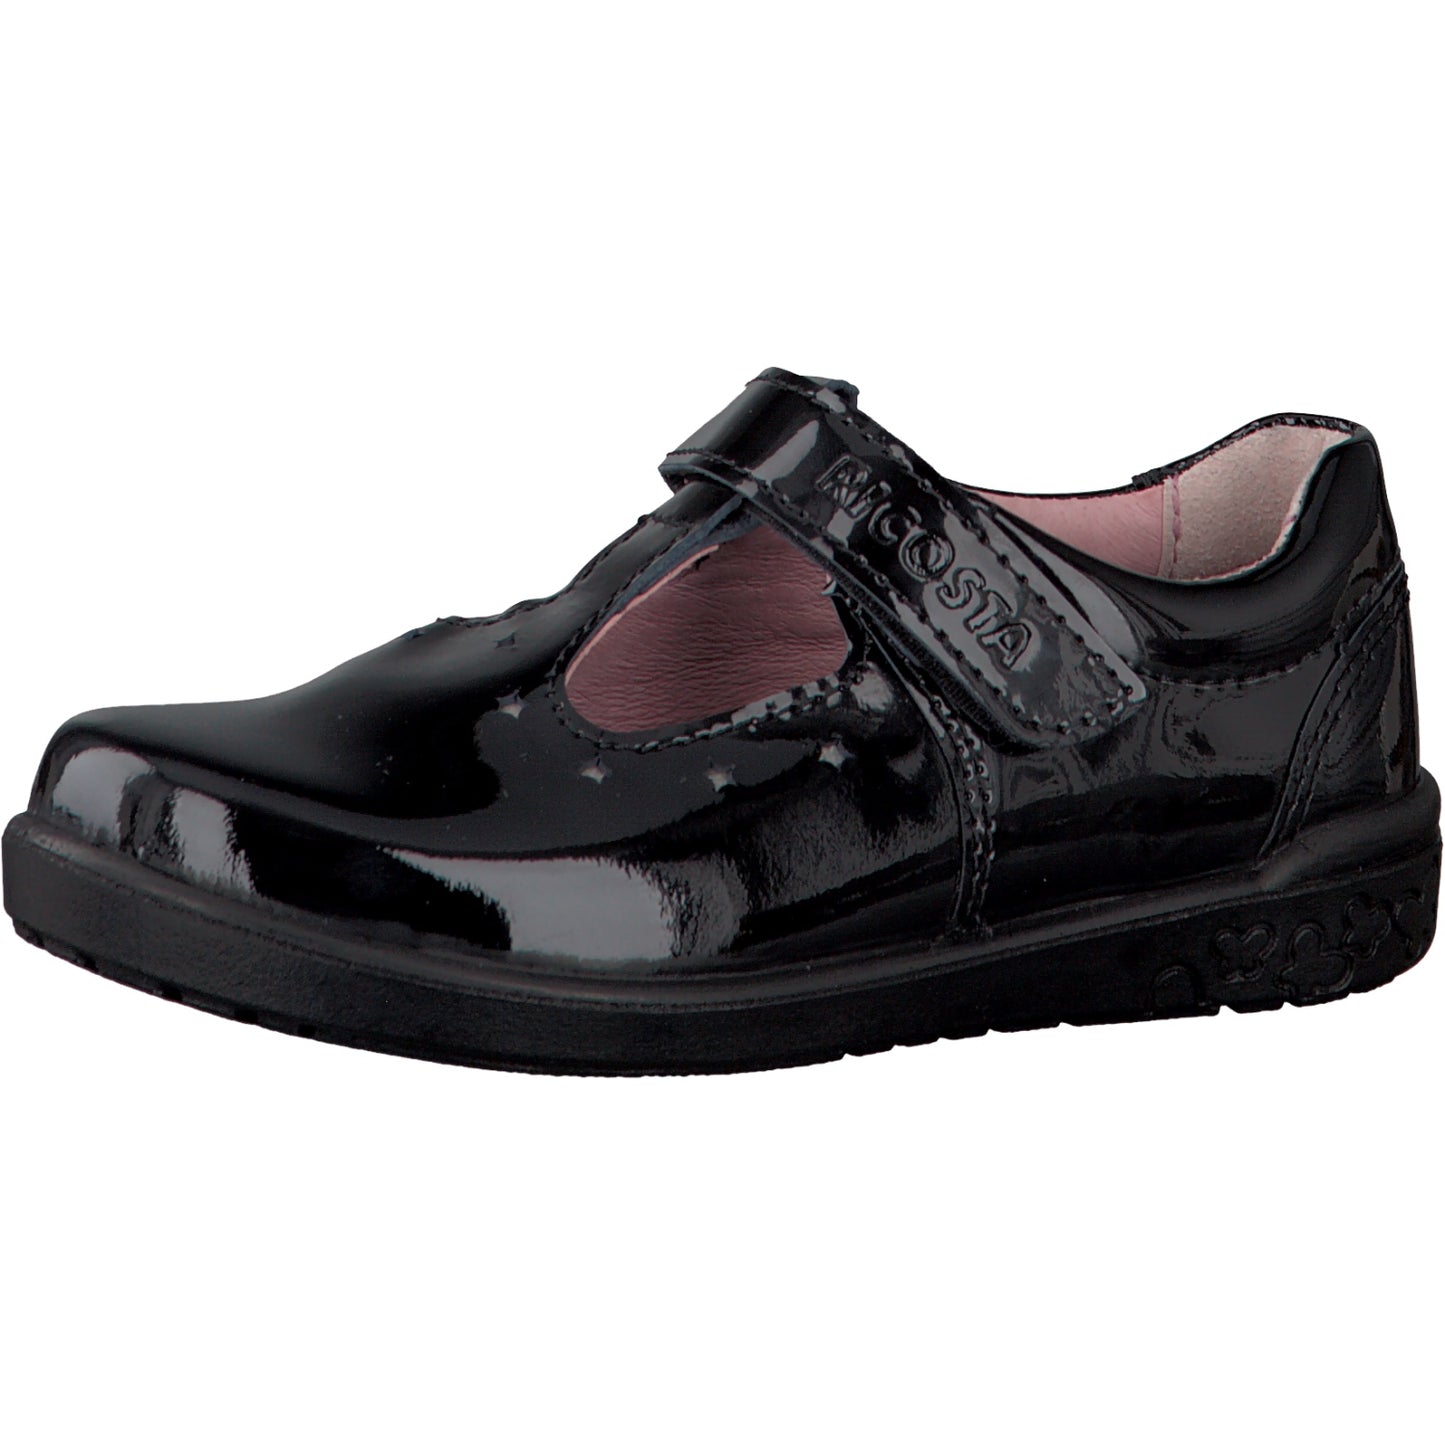 Ricosta Girls School Shoe Scarlett in Black Leather or Patent